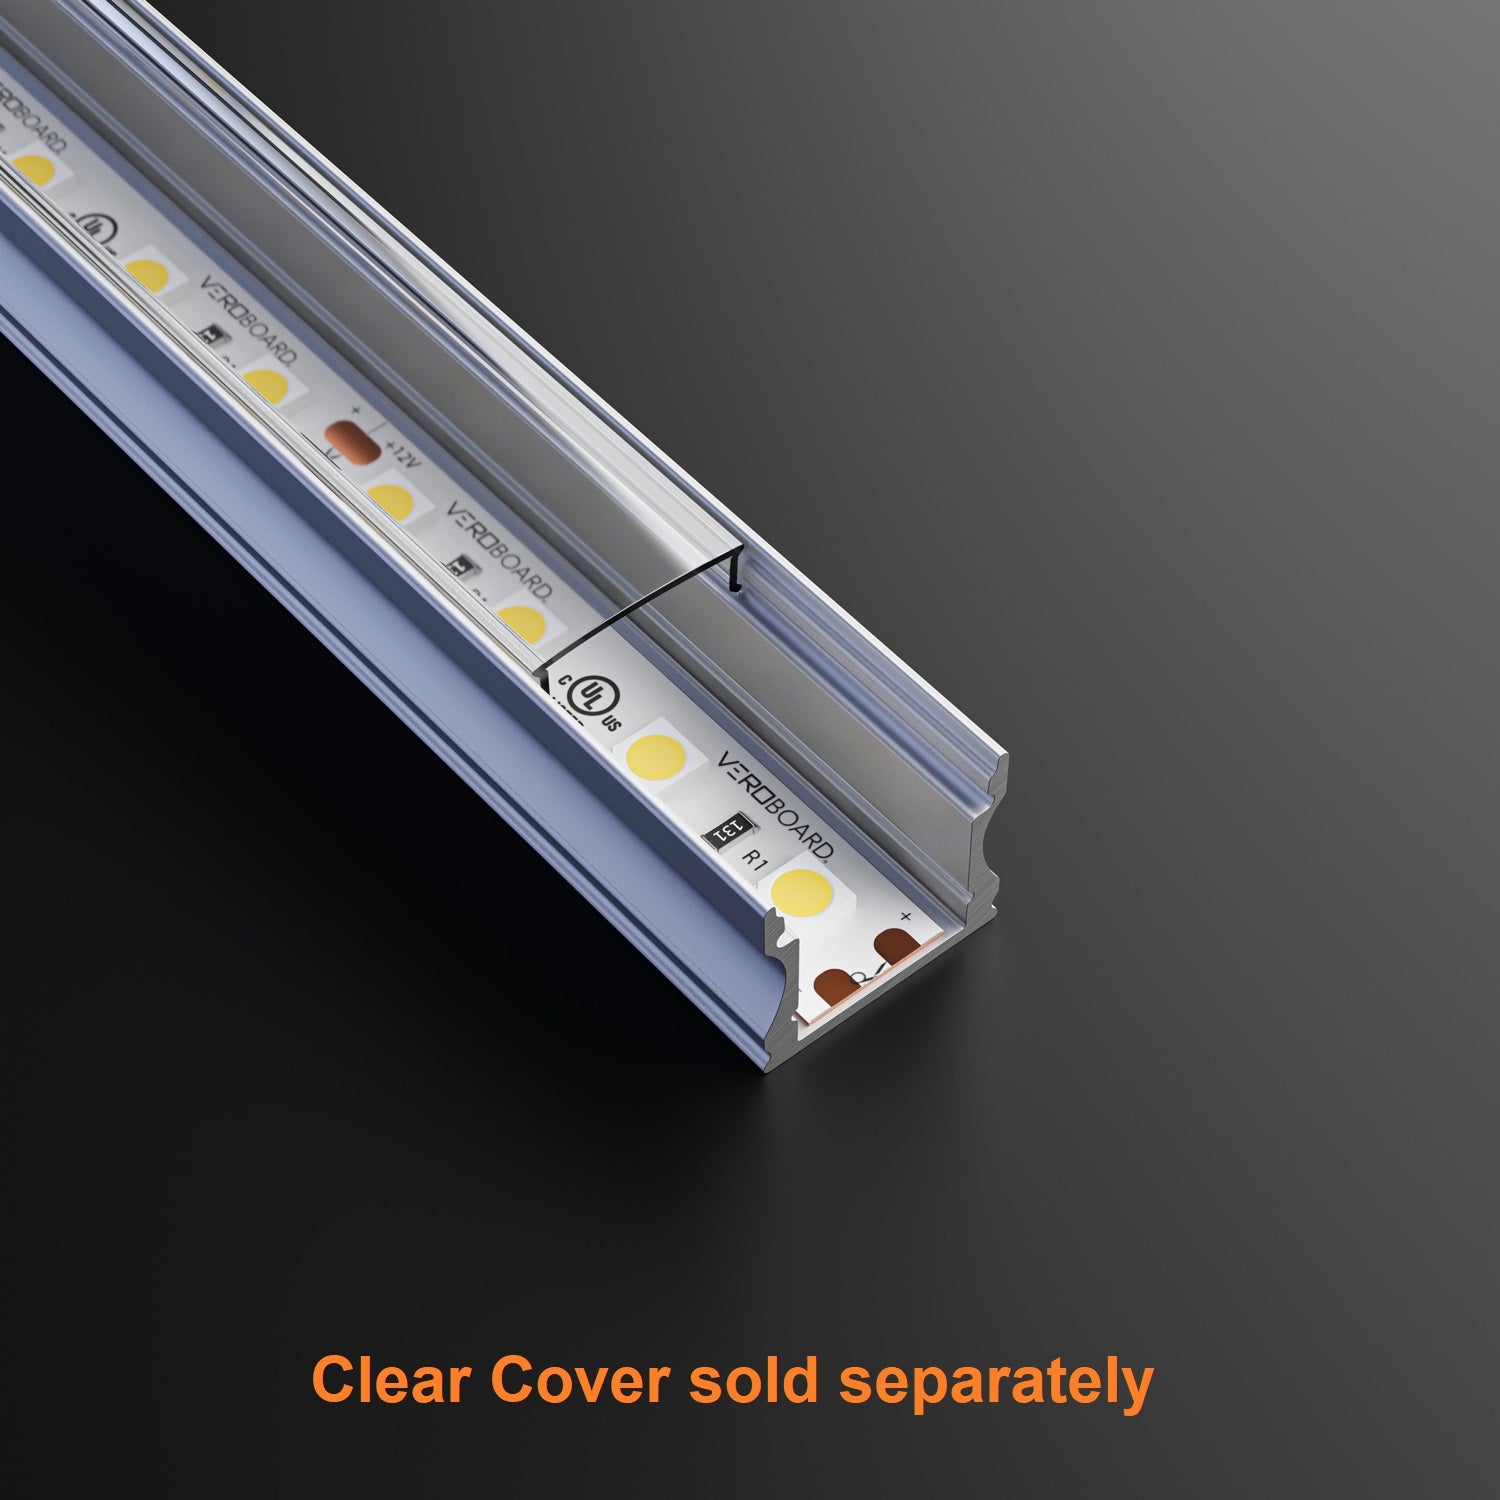 Low Profile Black Aluminum Linear LED Light for under cabinet 12V - S5